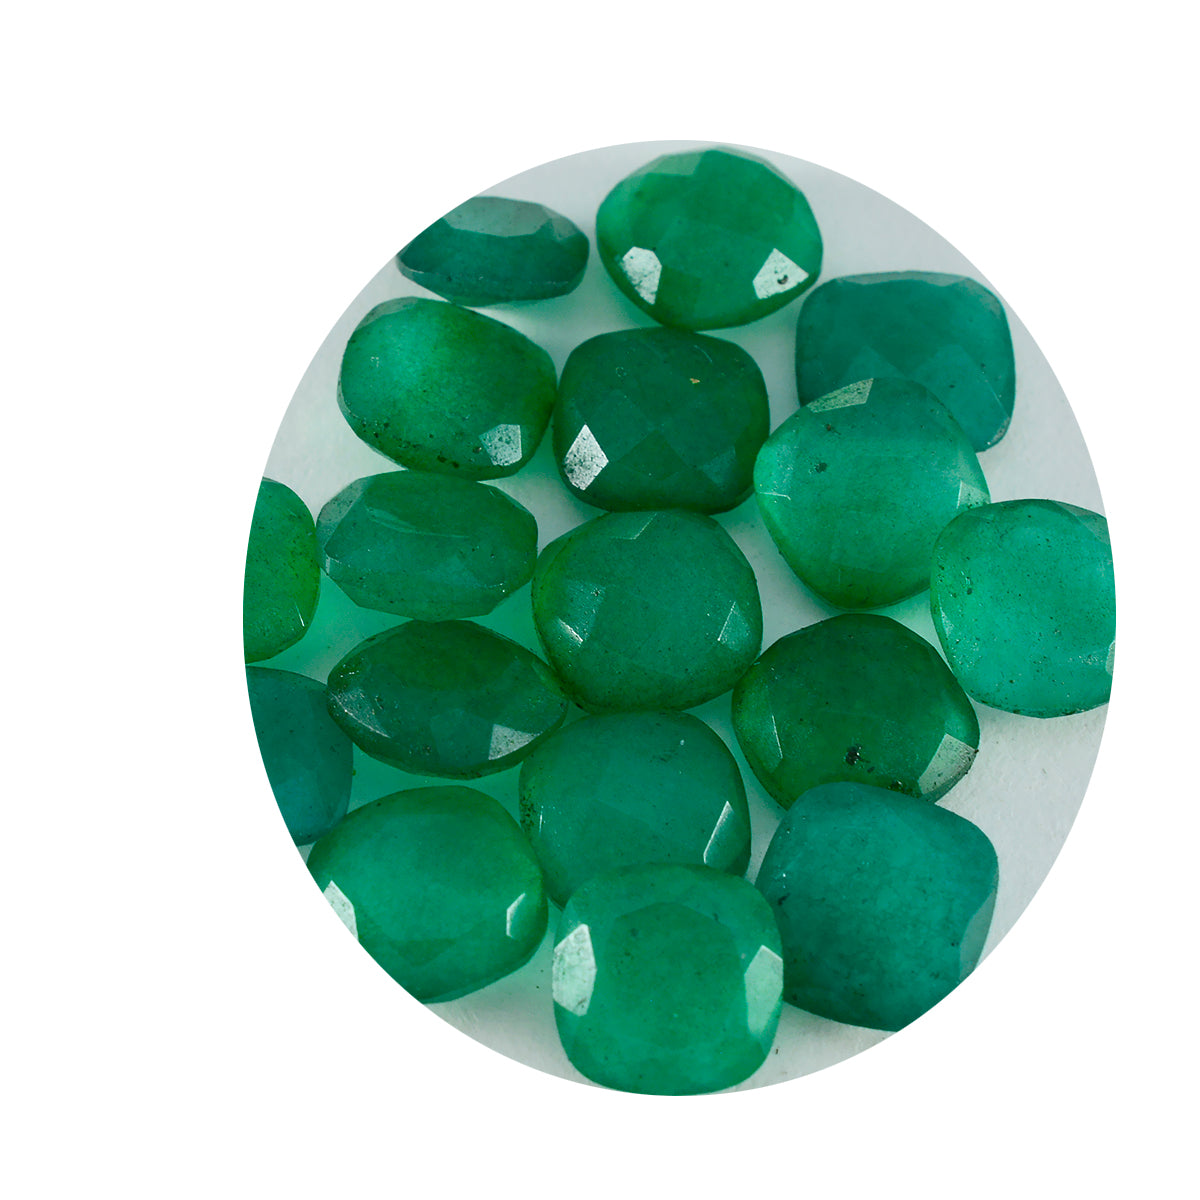 Riyogems 1PC Natural Green Jasper Faceted 5x5 mm Cushion Shape Good Quality Loose Stone